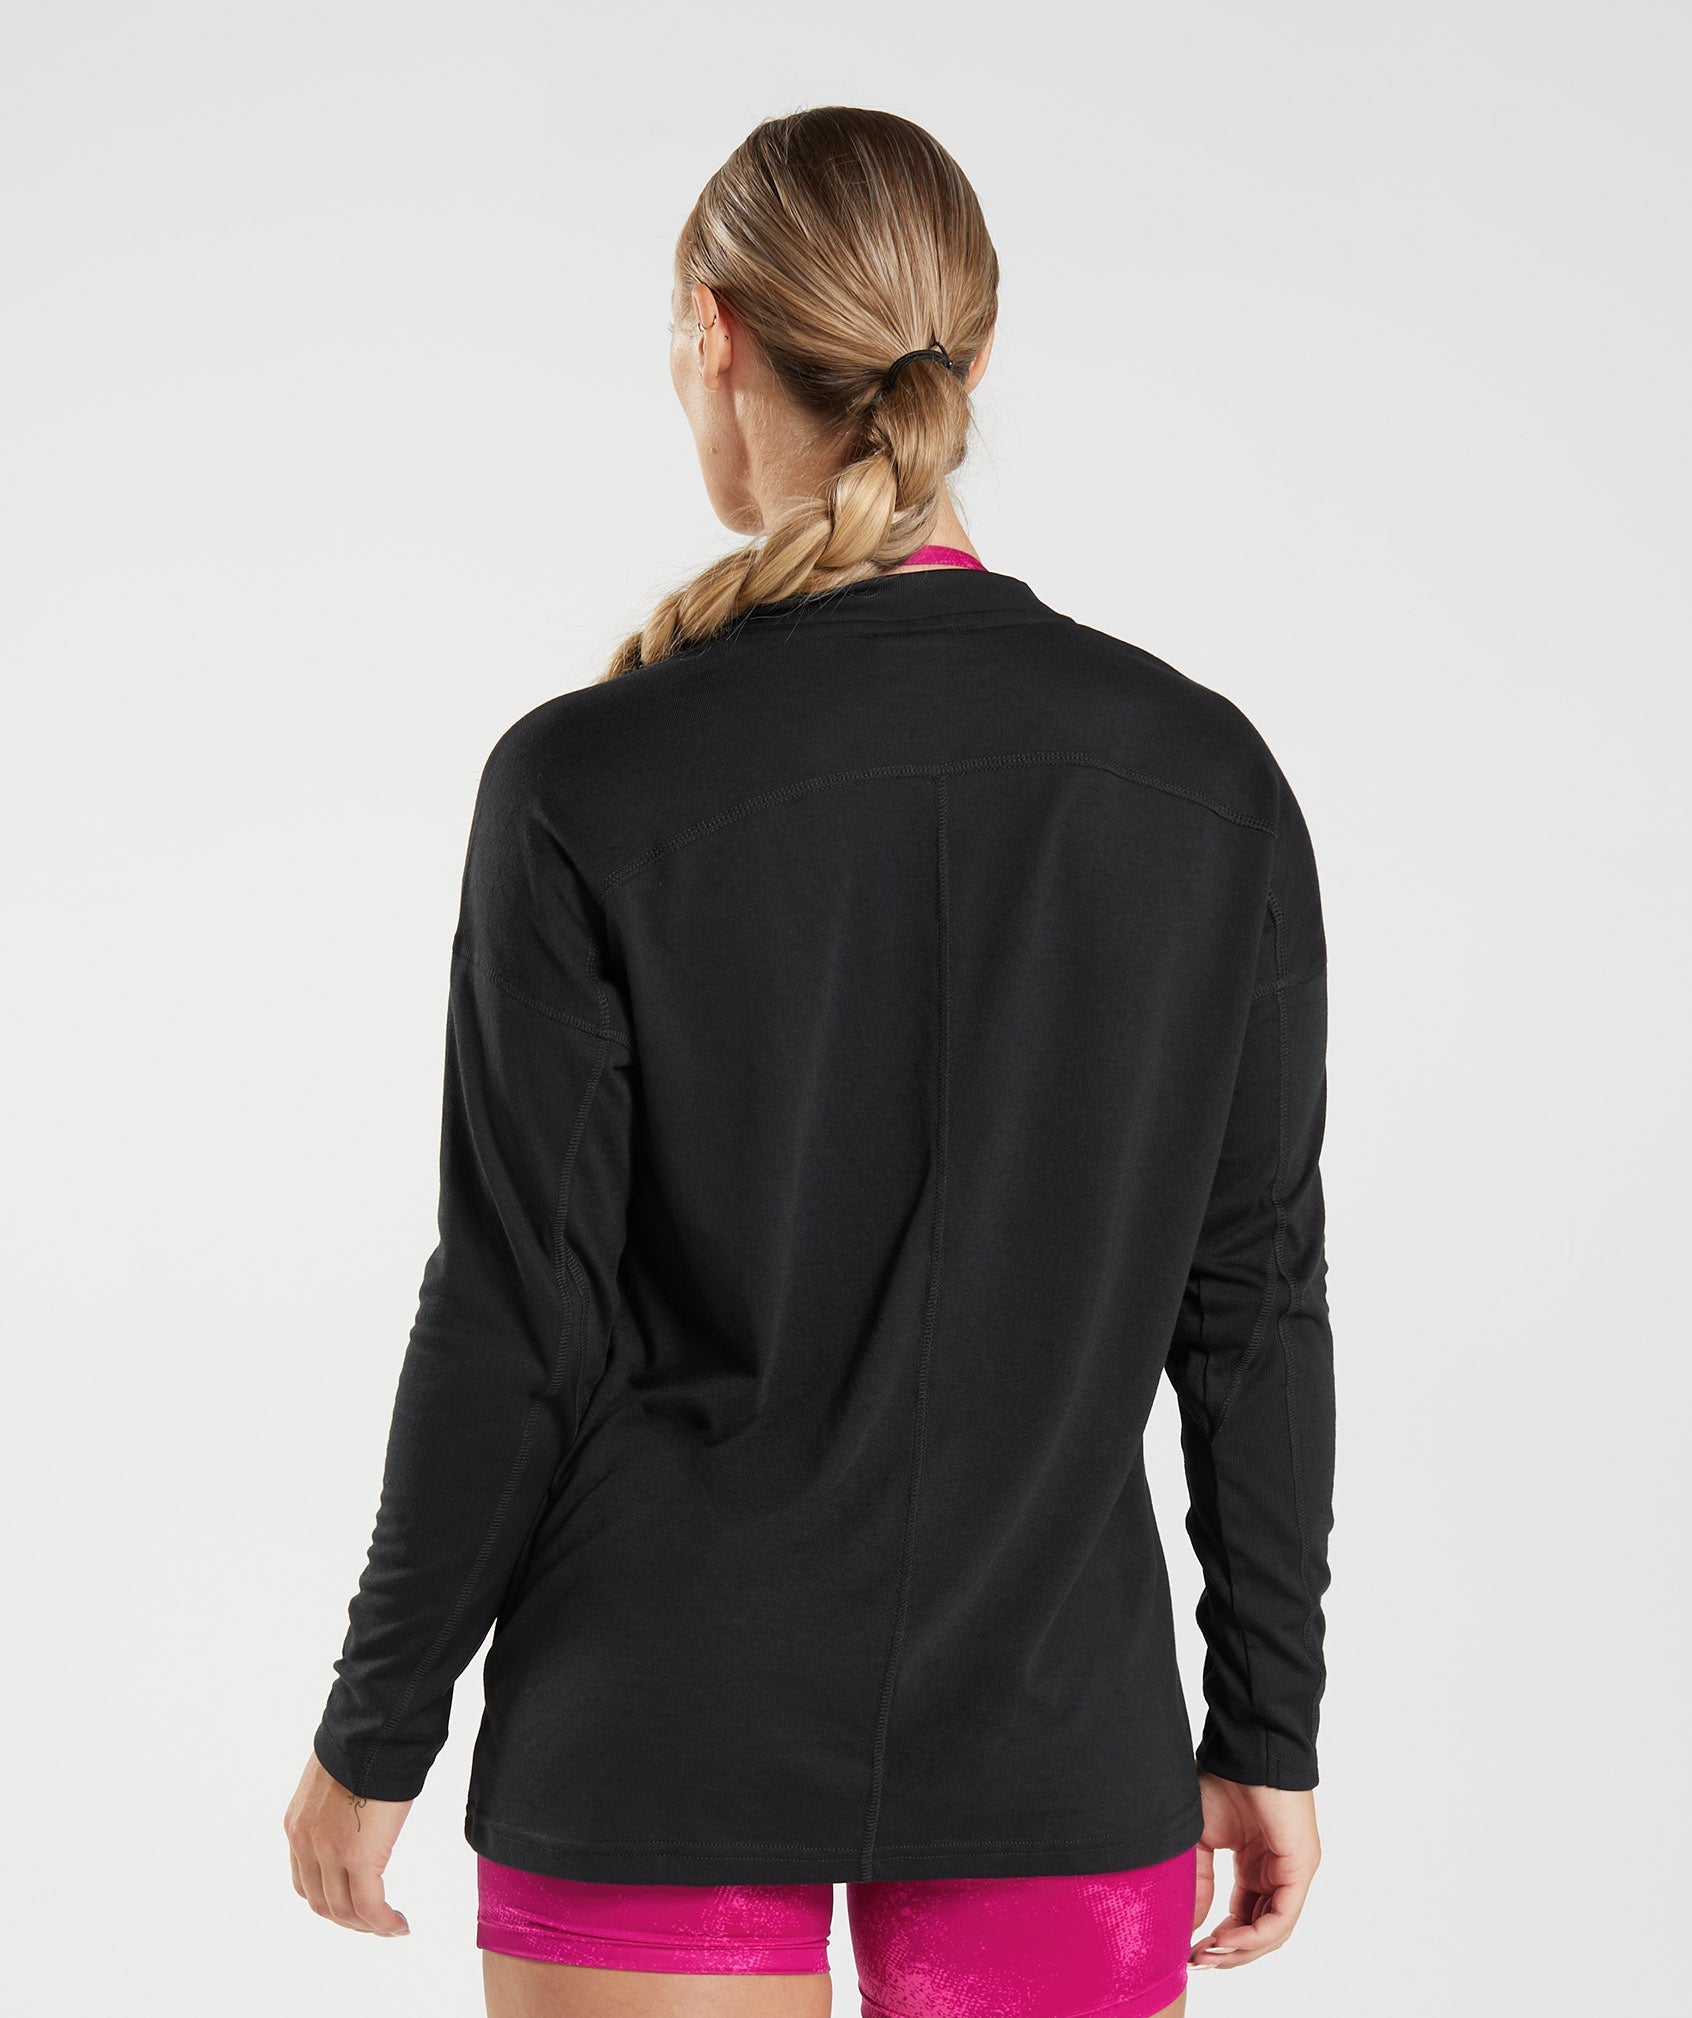 GS Power Long Sleeve T-Shirt in Black